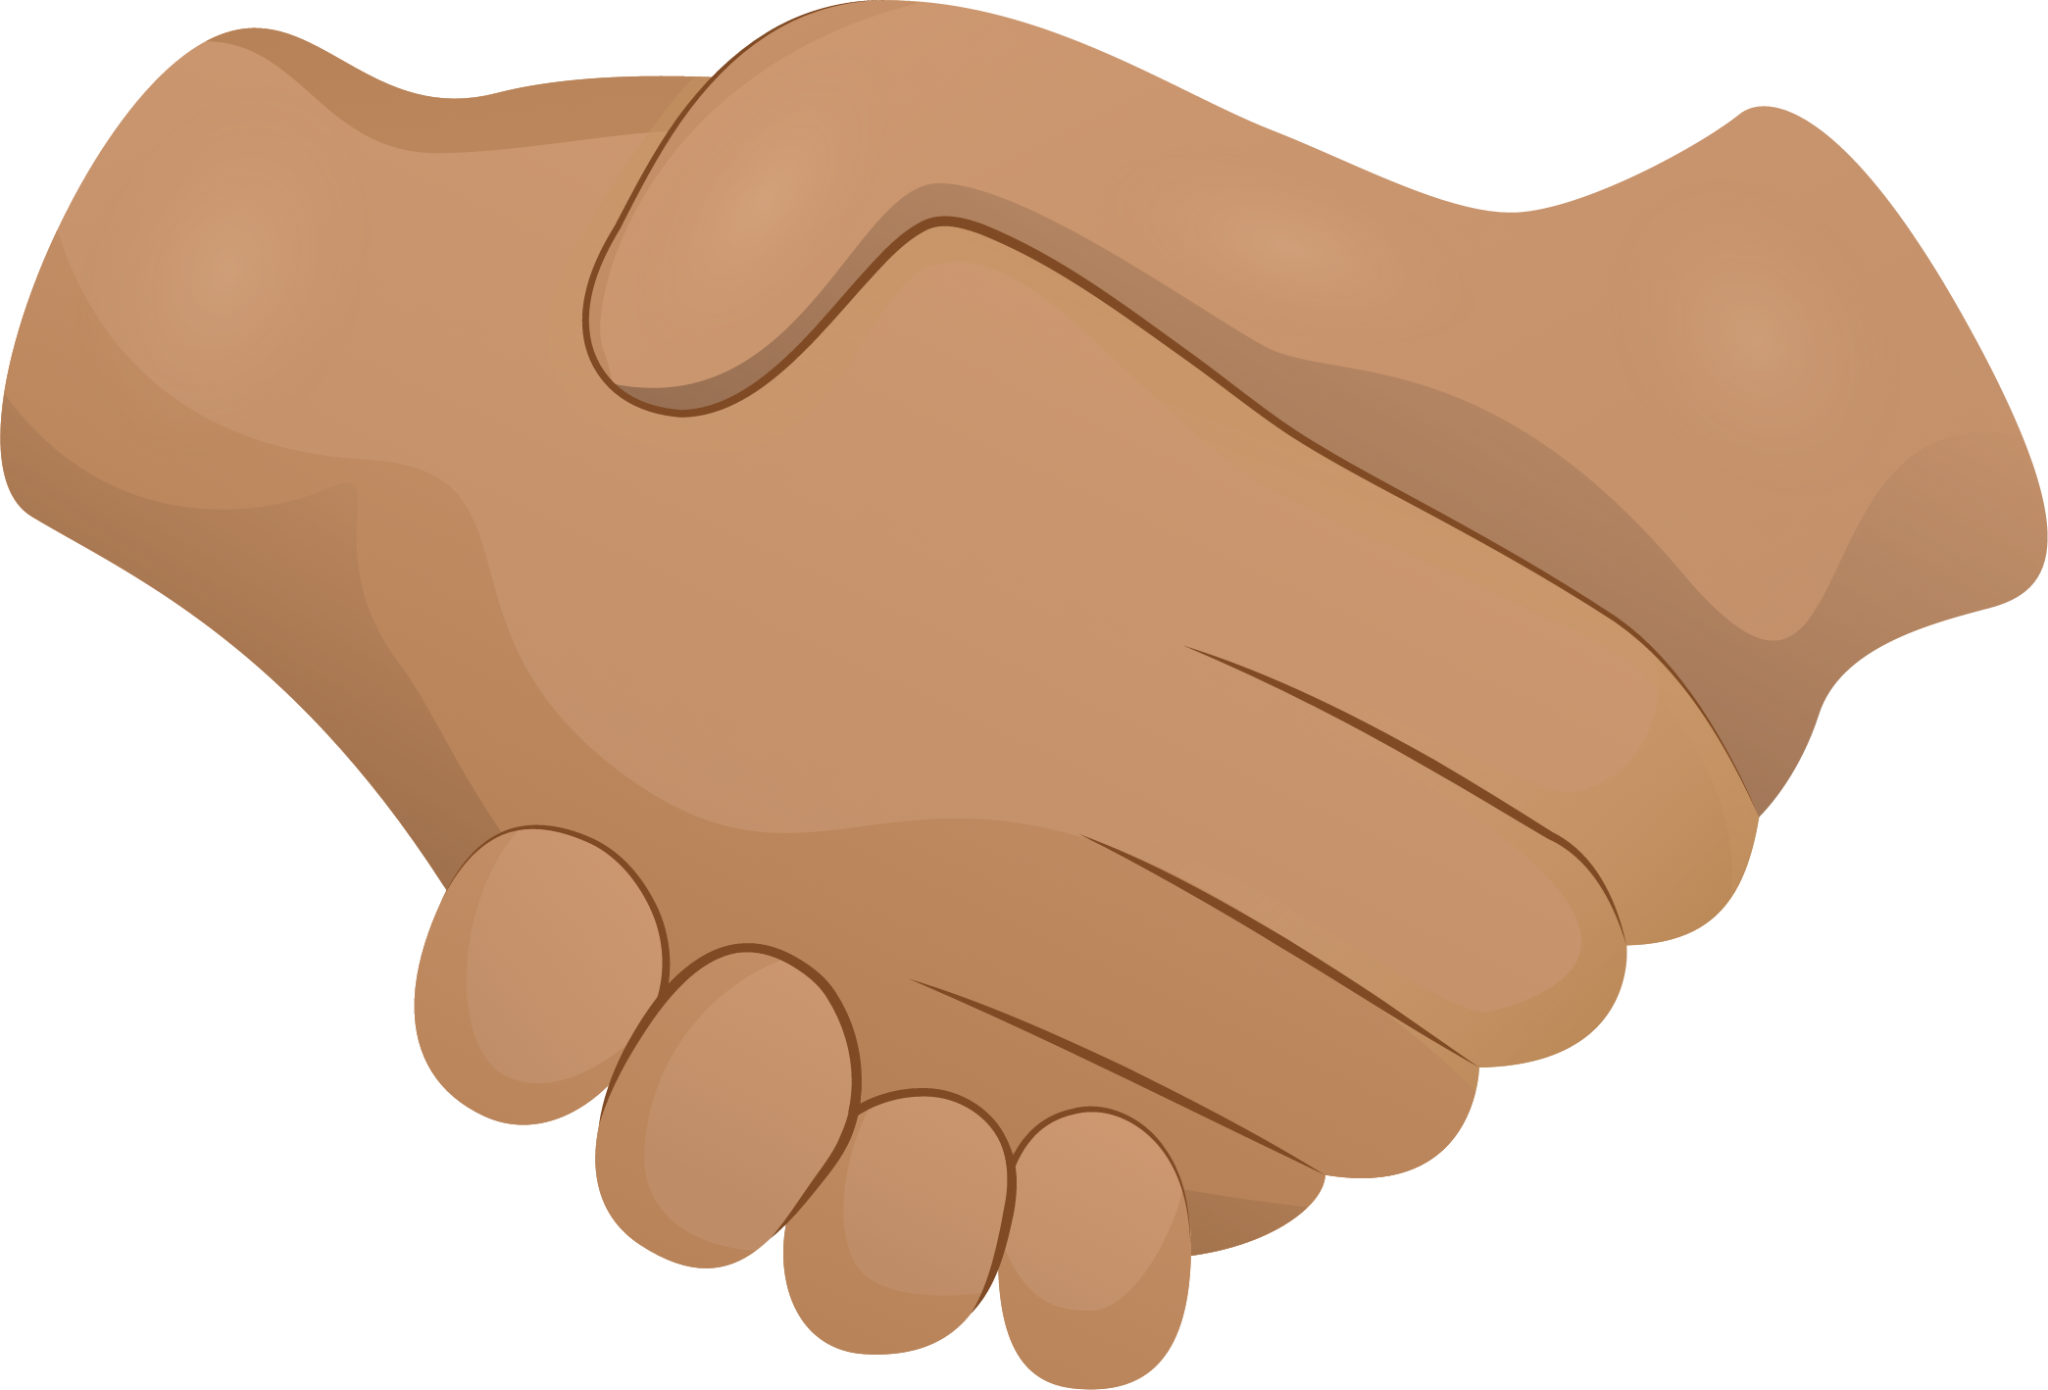 Handshake skin 3 emoji emoji